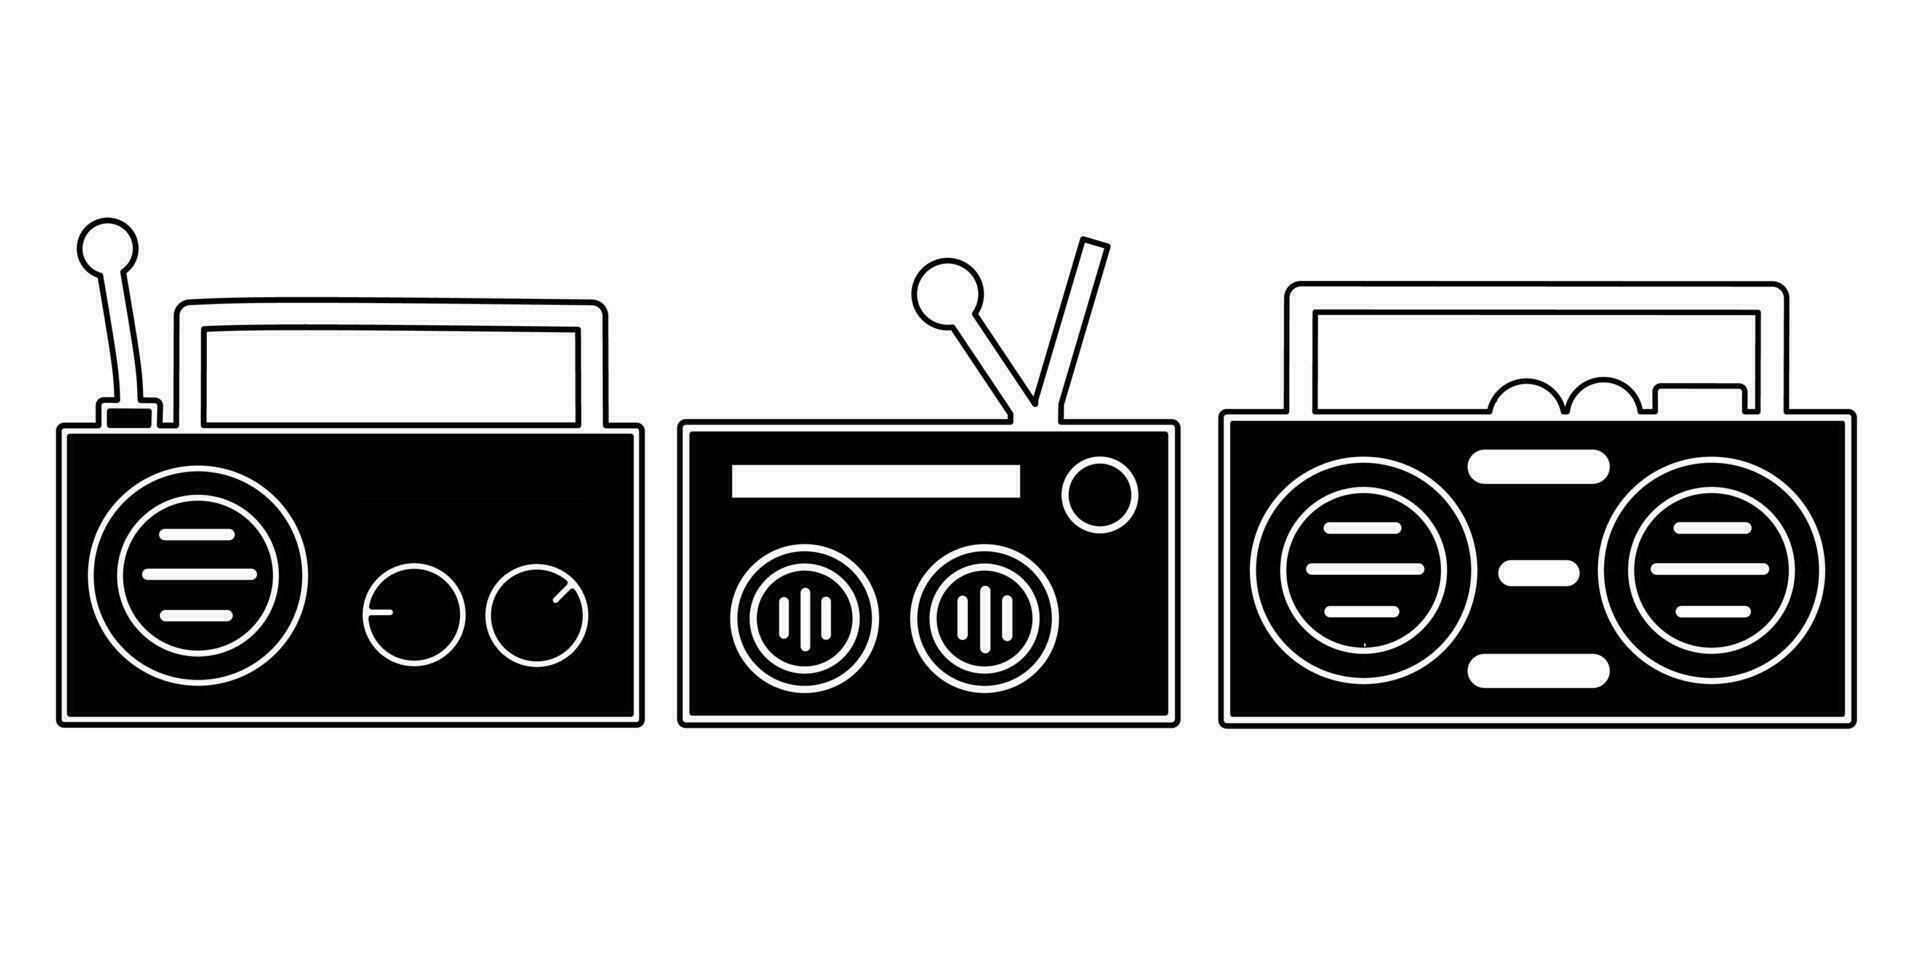 radio icône collection. un illustration de une noir radio icône. Stock vecteur. vecteur